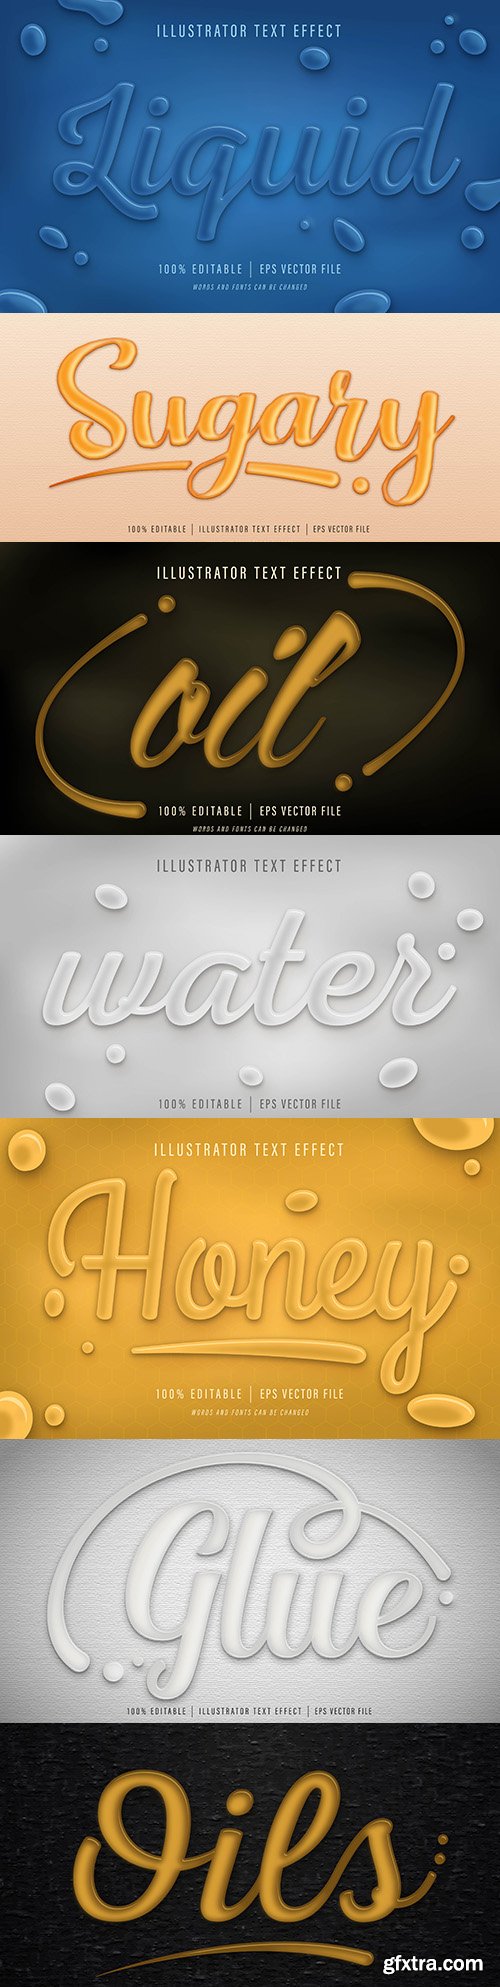 Editable font effect text collection illustration design 85
